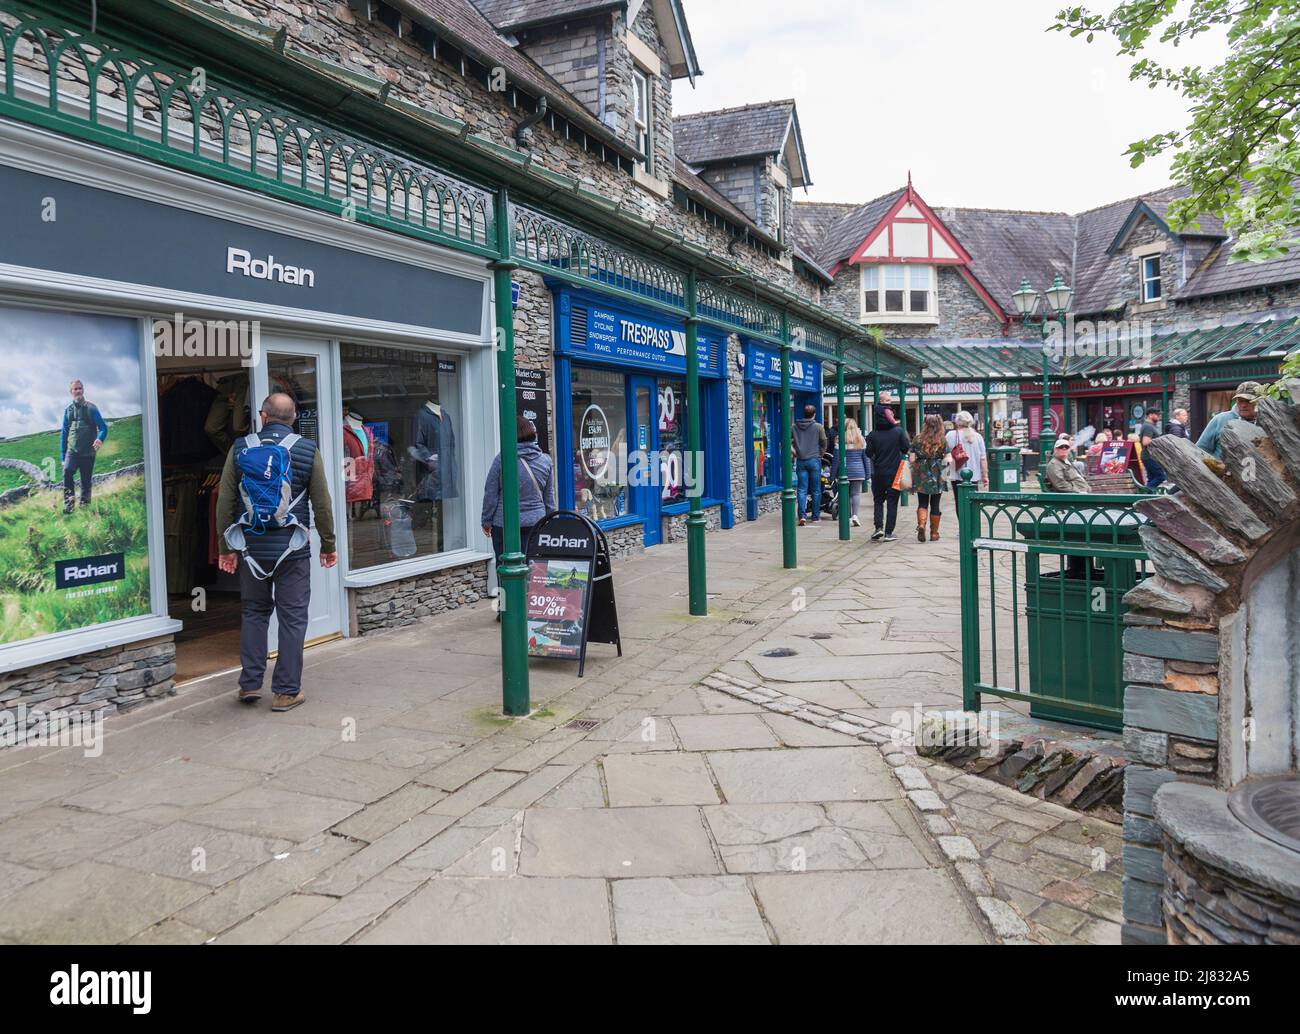 Shopping precinct in Ambleside,Lake District,England,UK. Rohan and Trespass shops Stock Photo